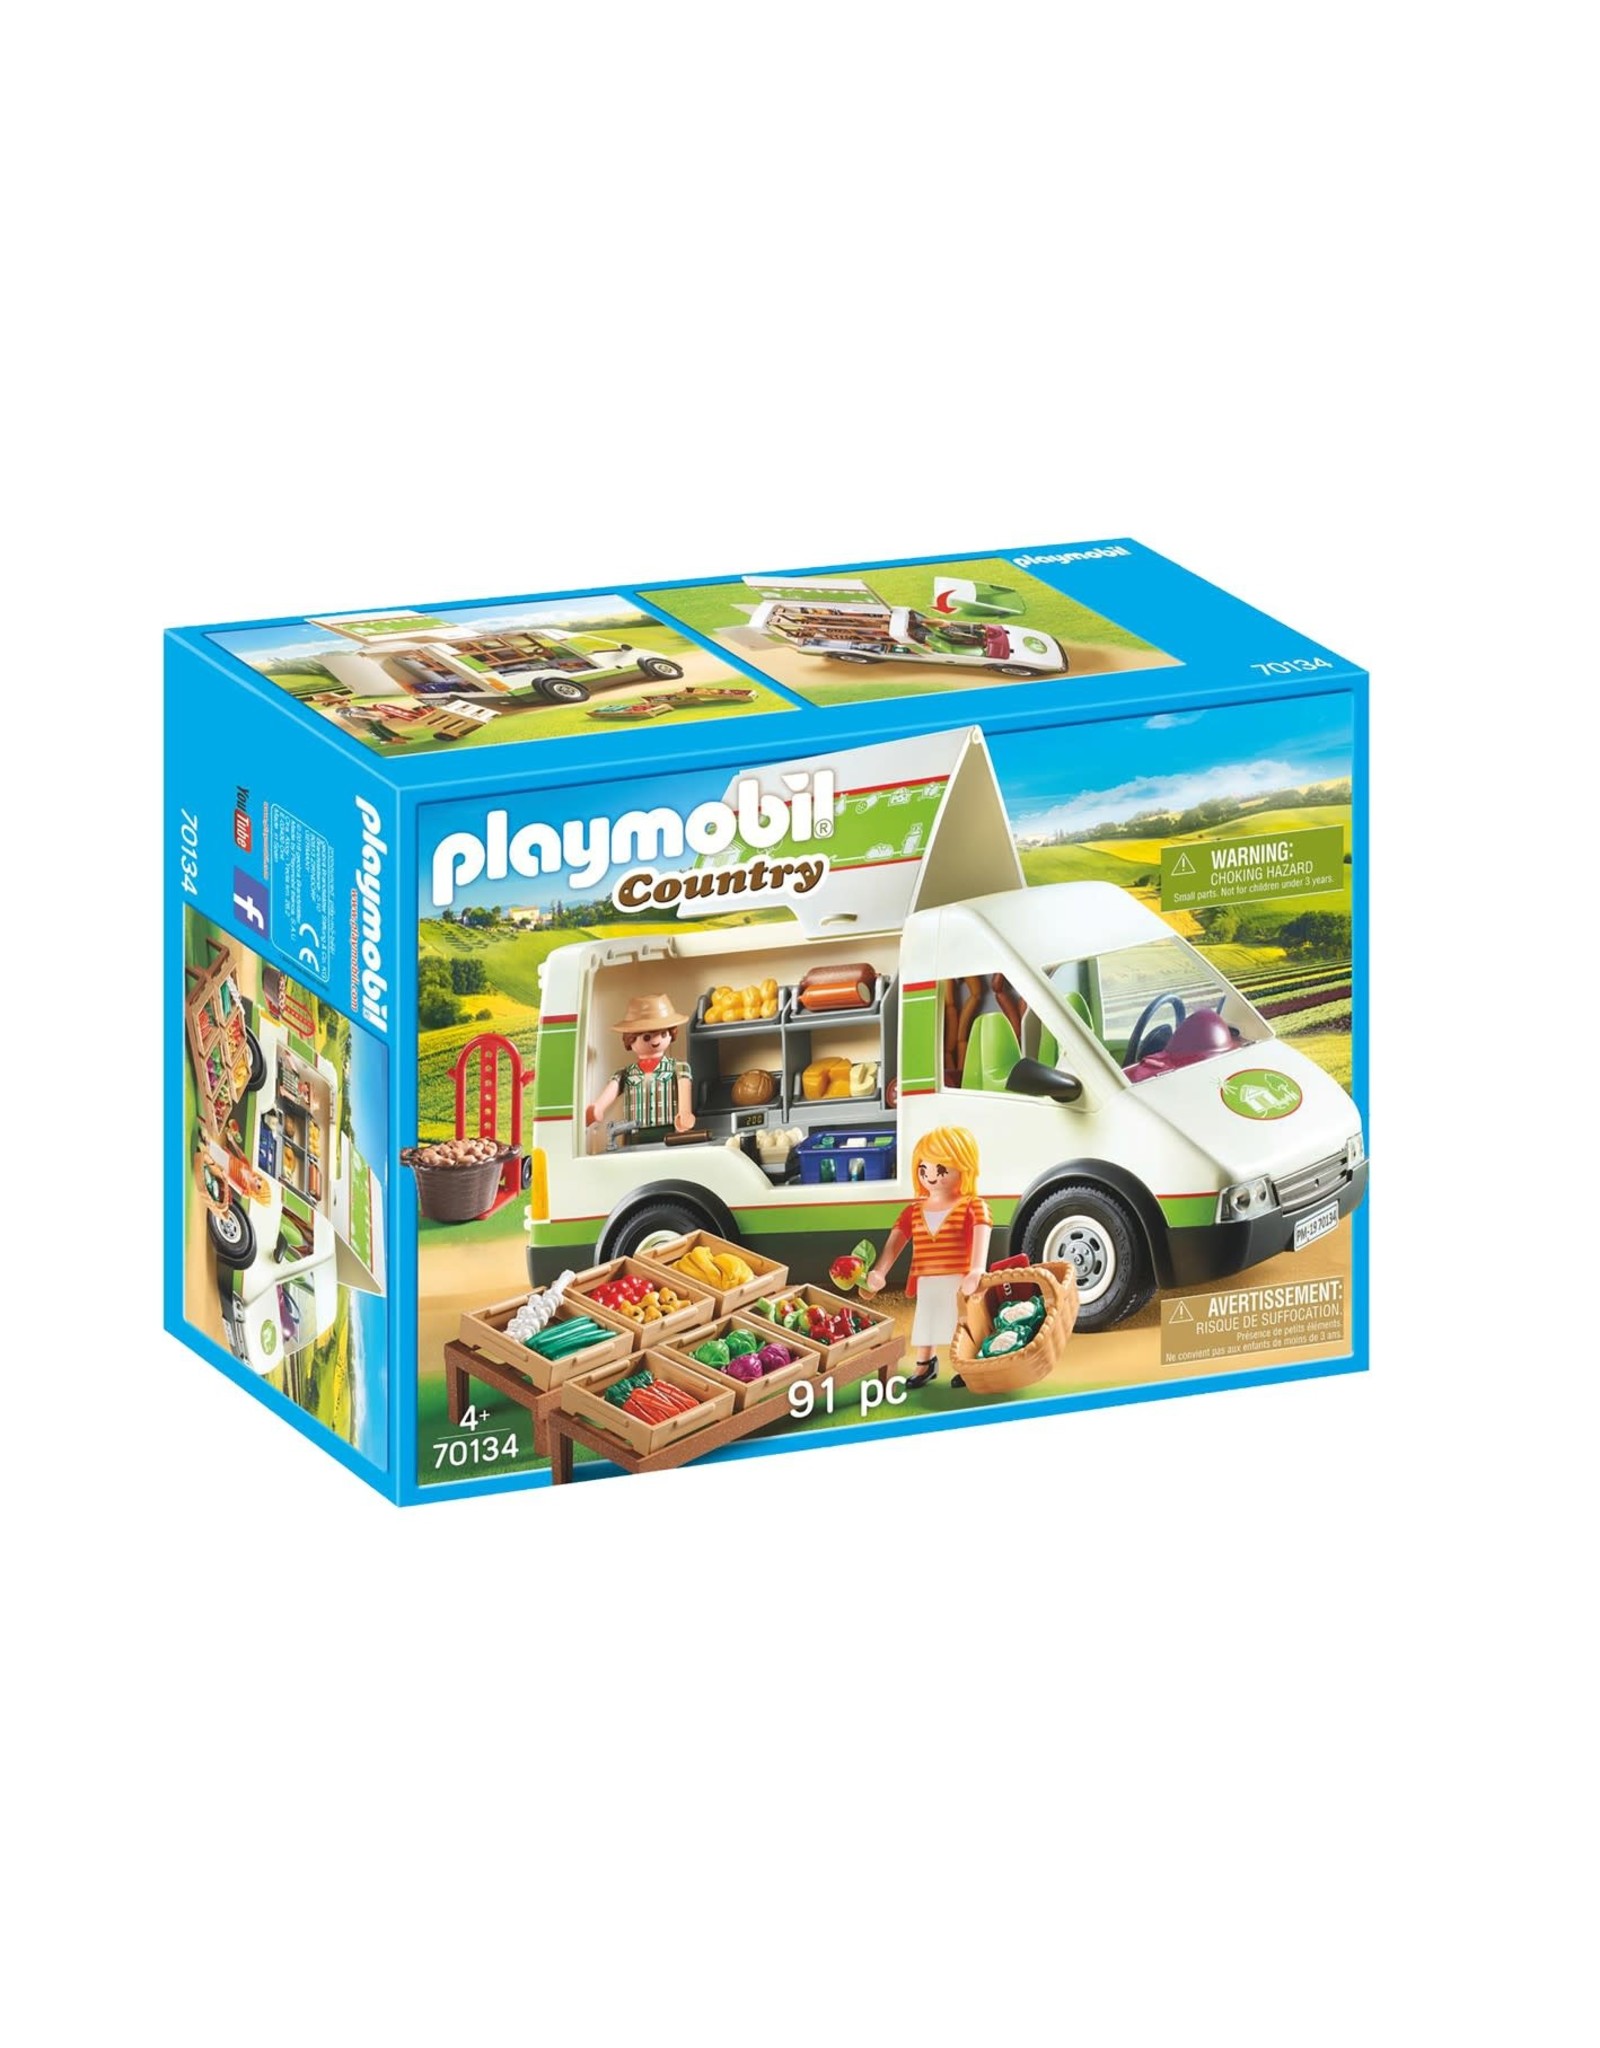 Playmobil Playmobil Country 70134 Marktkraamwagen